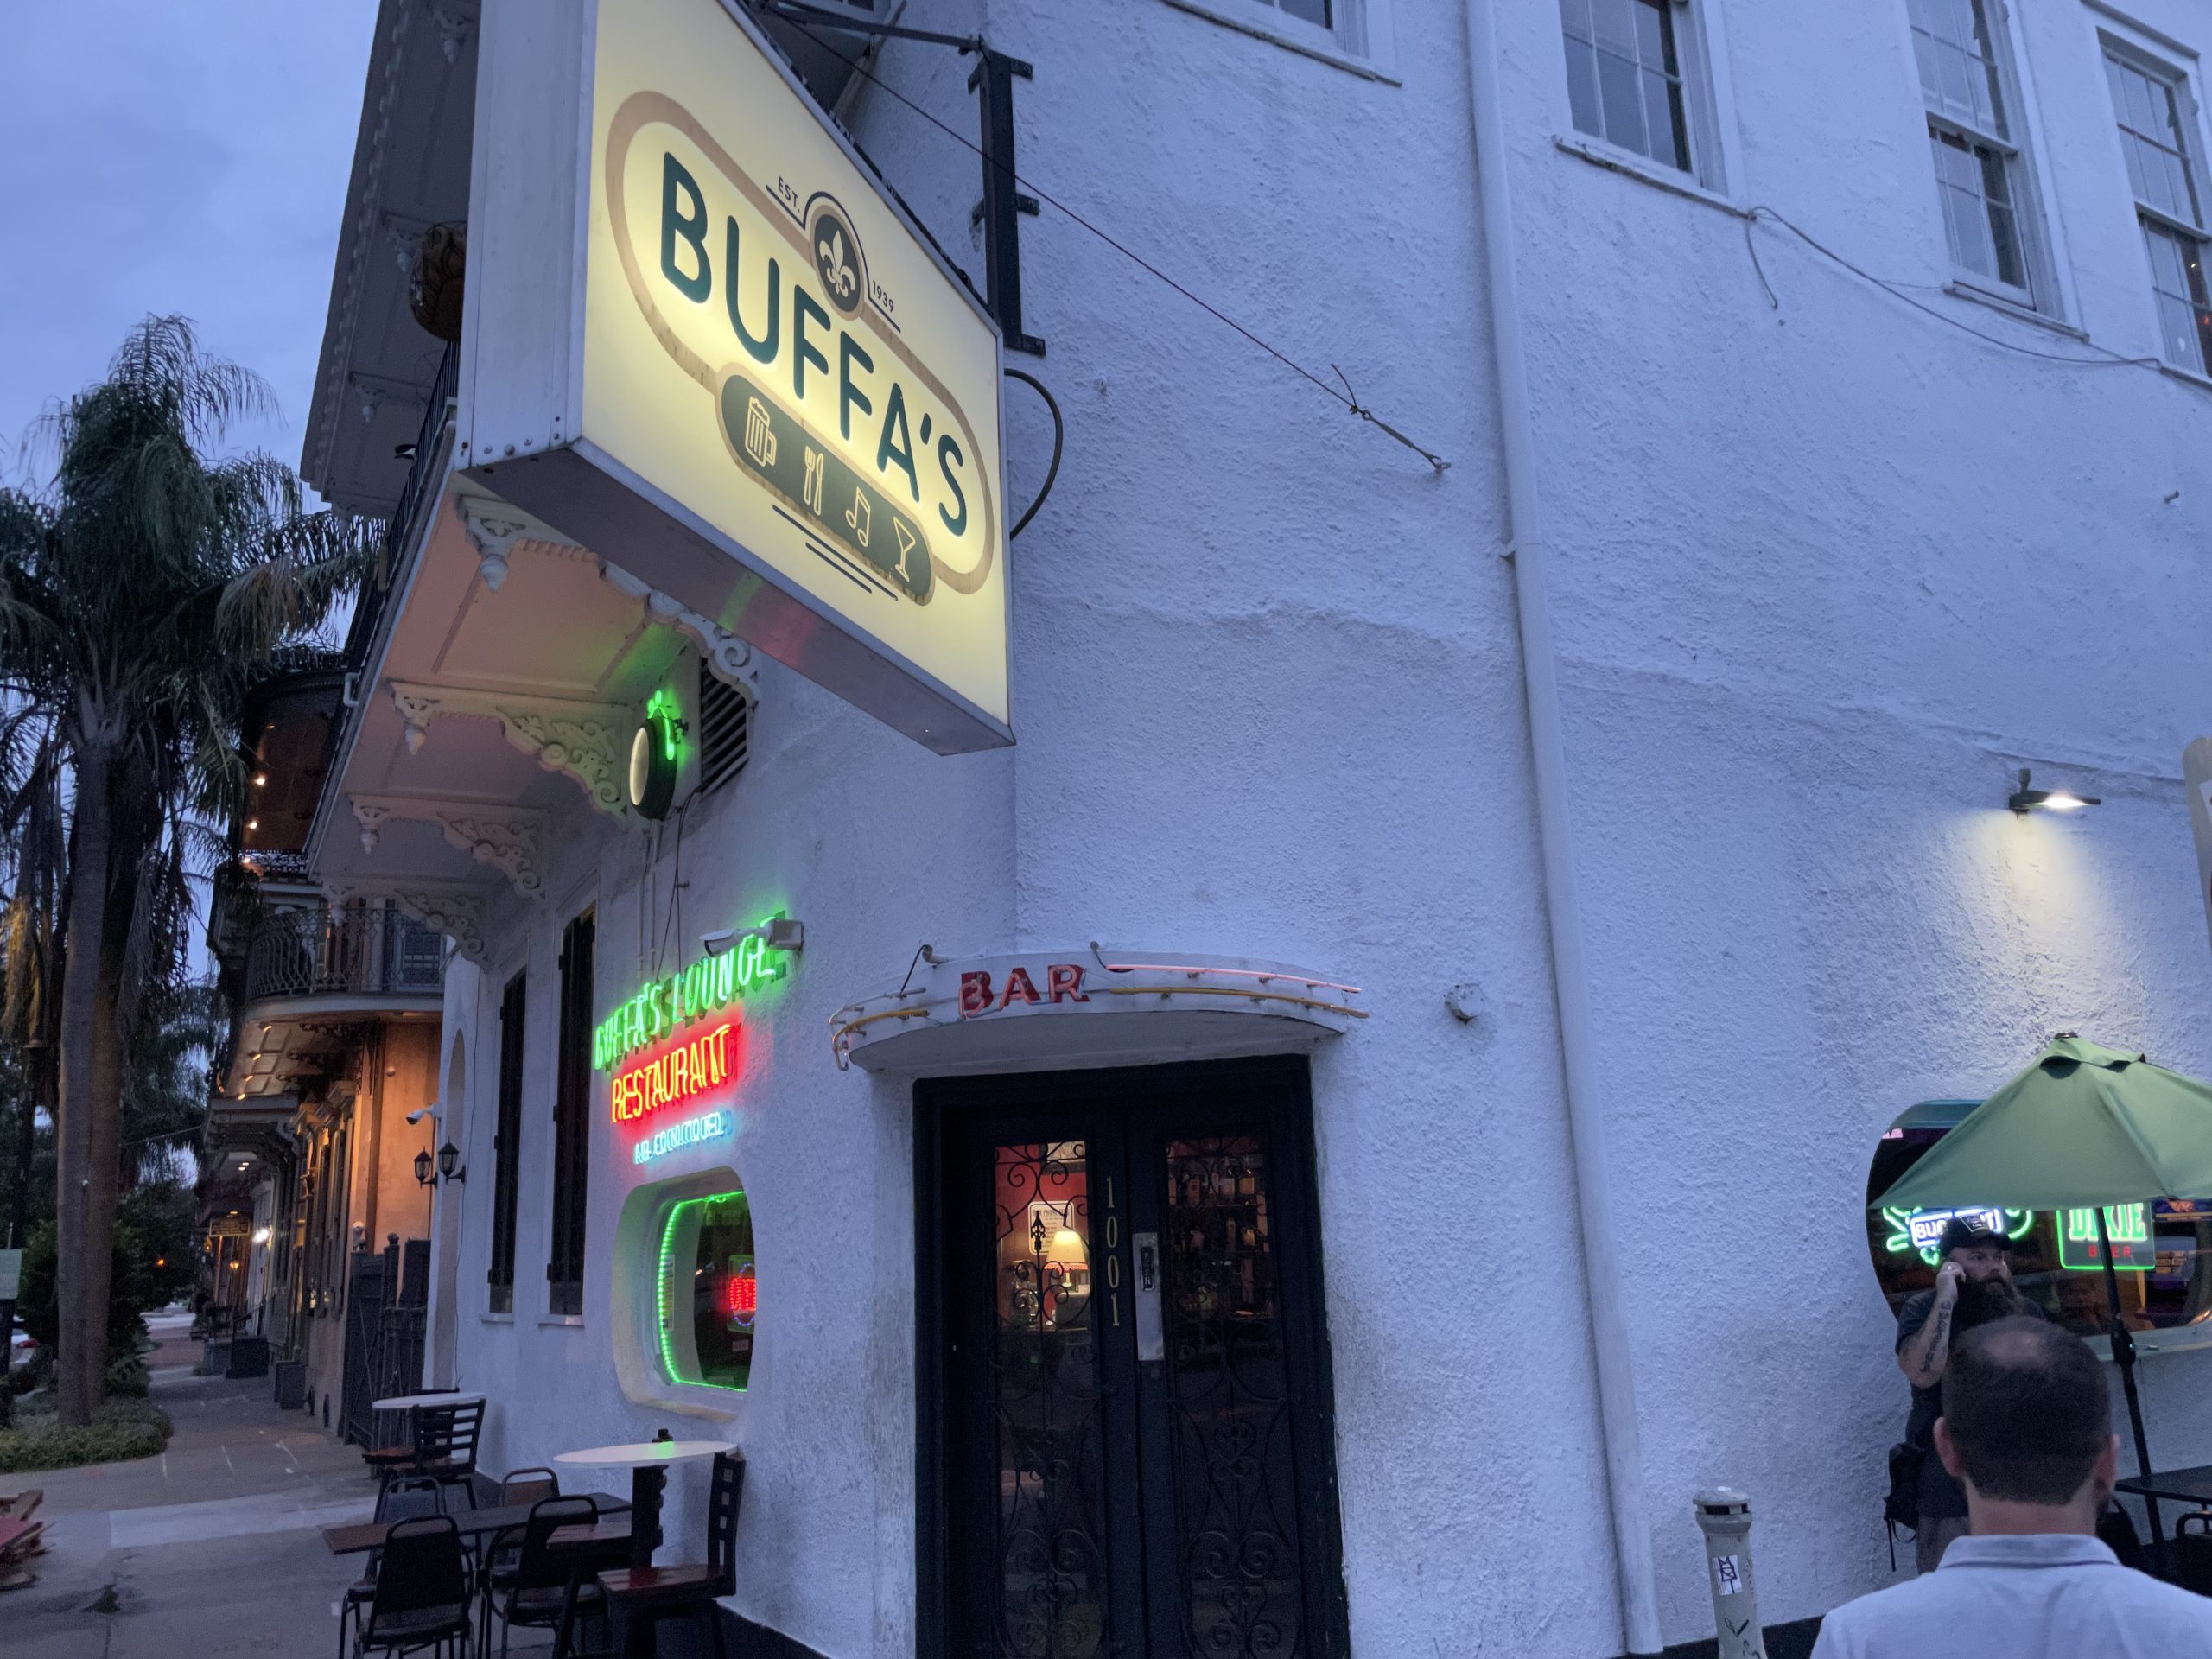 Buffa's - New Orleans Dive Bar - Sign